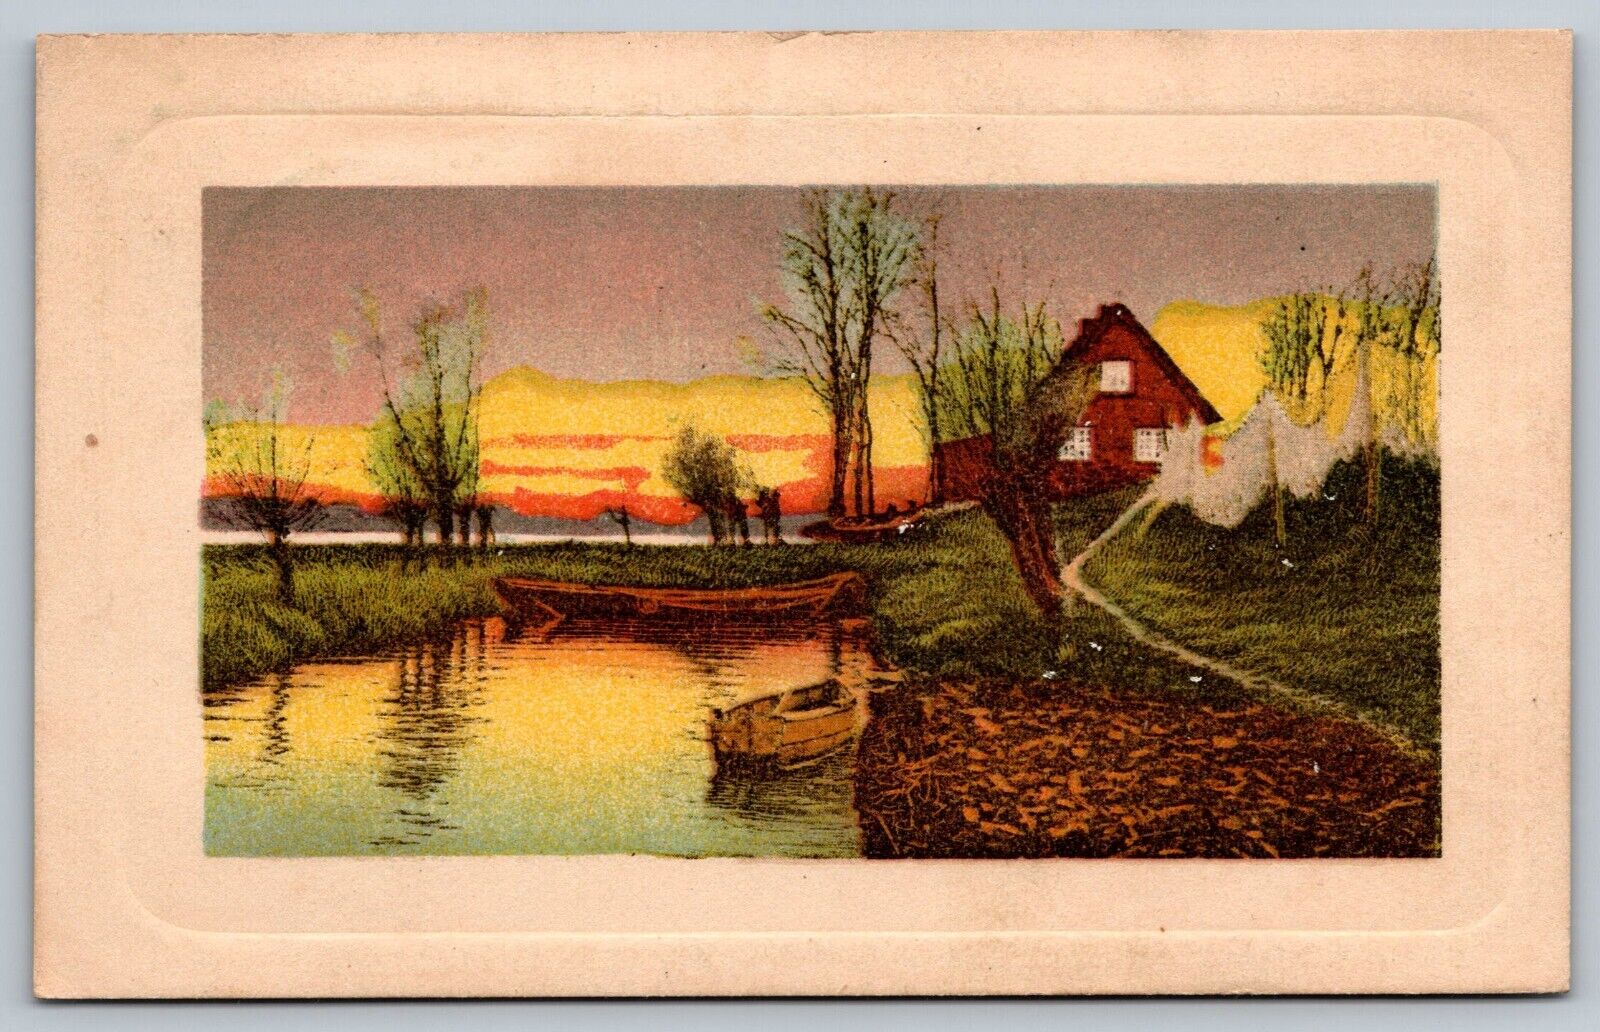 Vintage Postcard LITHO PRINT SUNSET SCENE WATER HOUSE ON LAKE